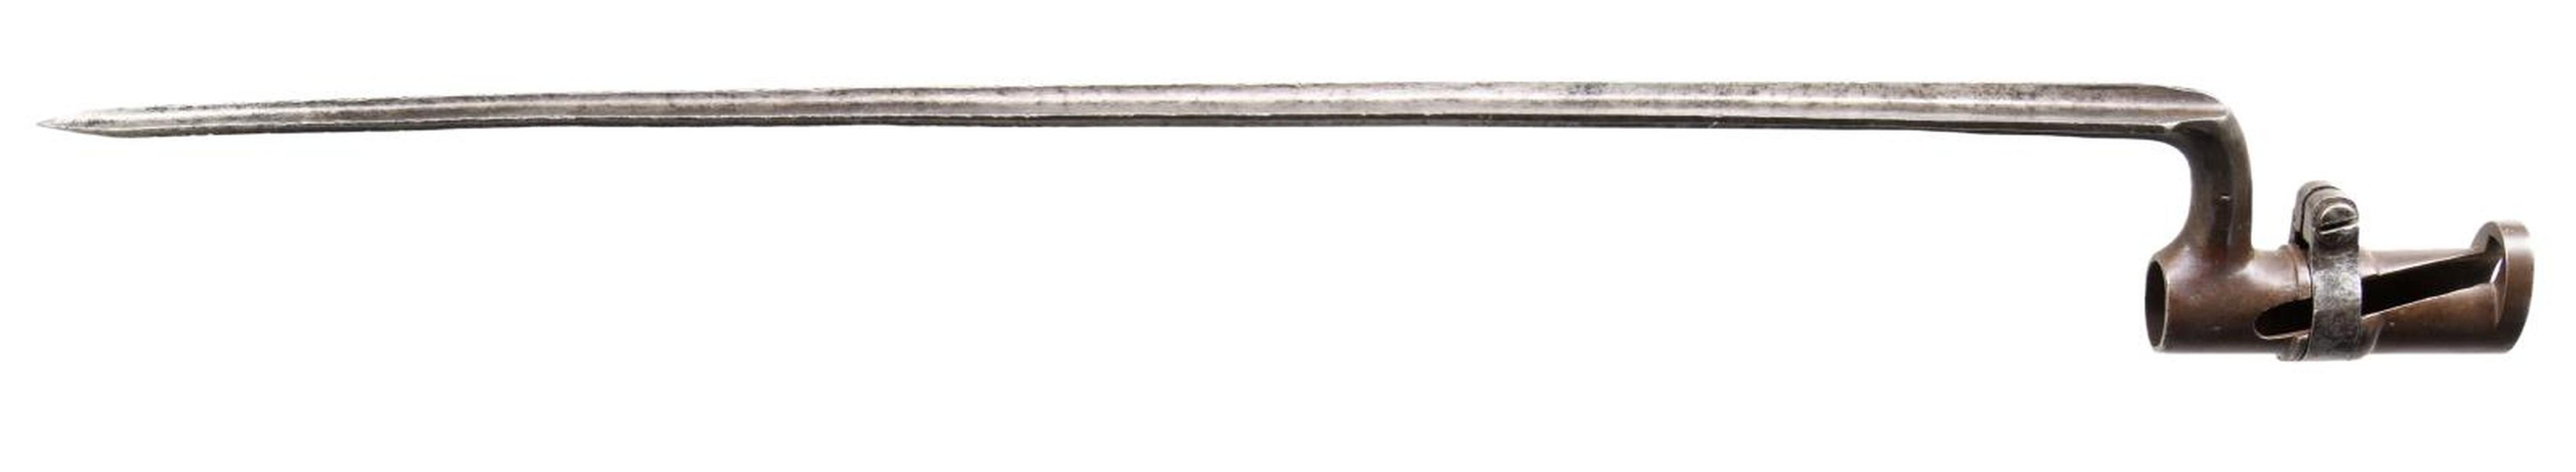 CIVIL WAR PERIOD M1854 AUSTRIAN LORENZ MUSKET